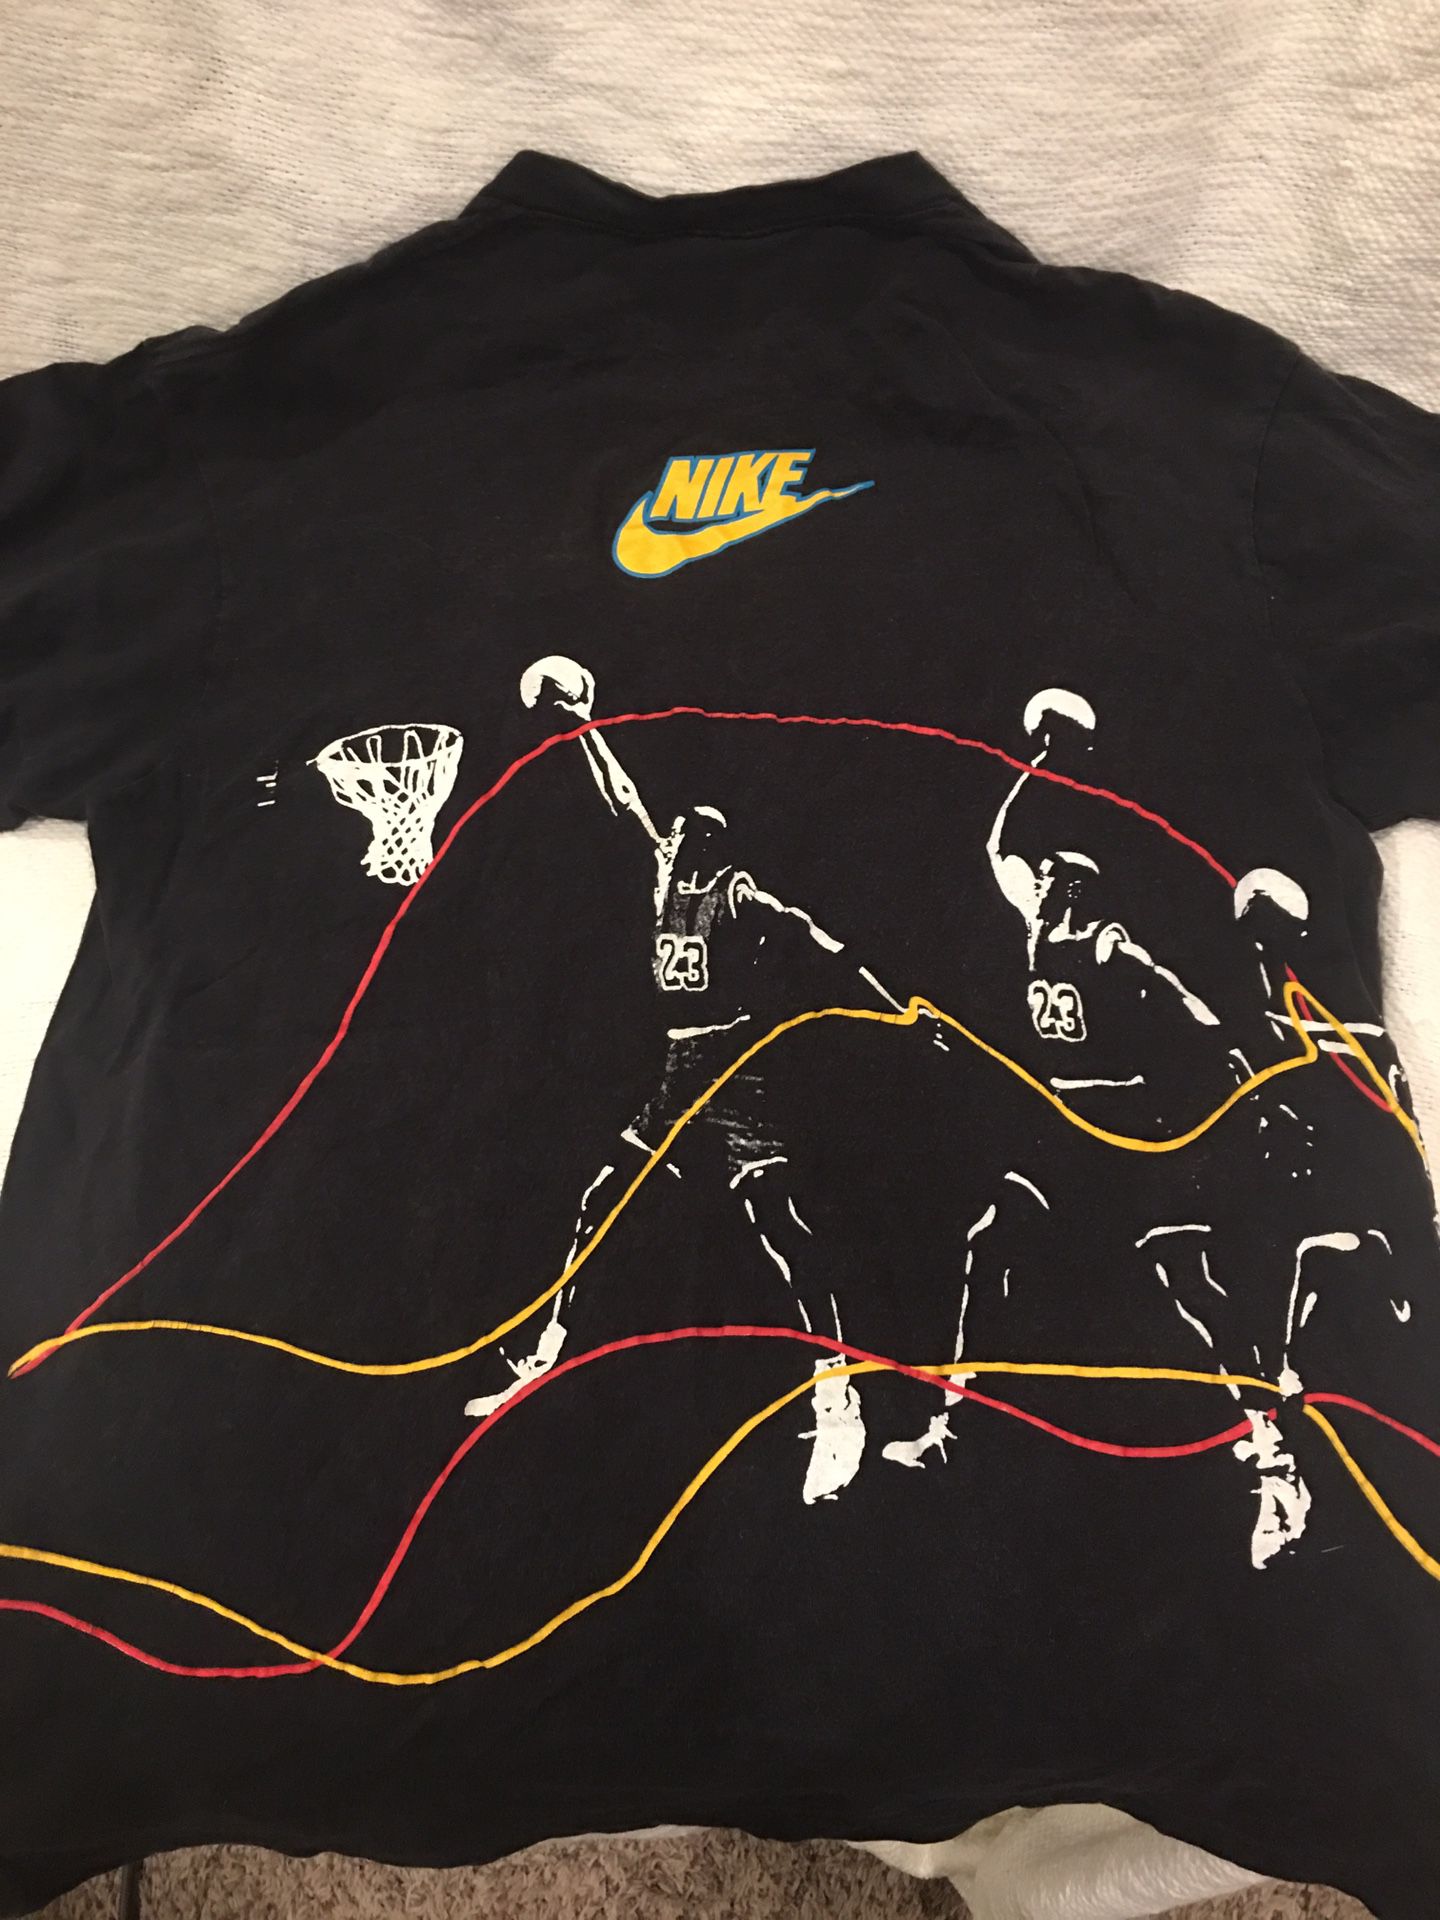 Vintage 1990s Michael Jordan dunk Nike T-shirt